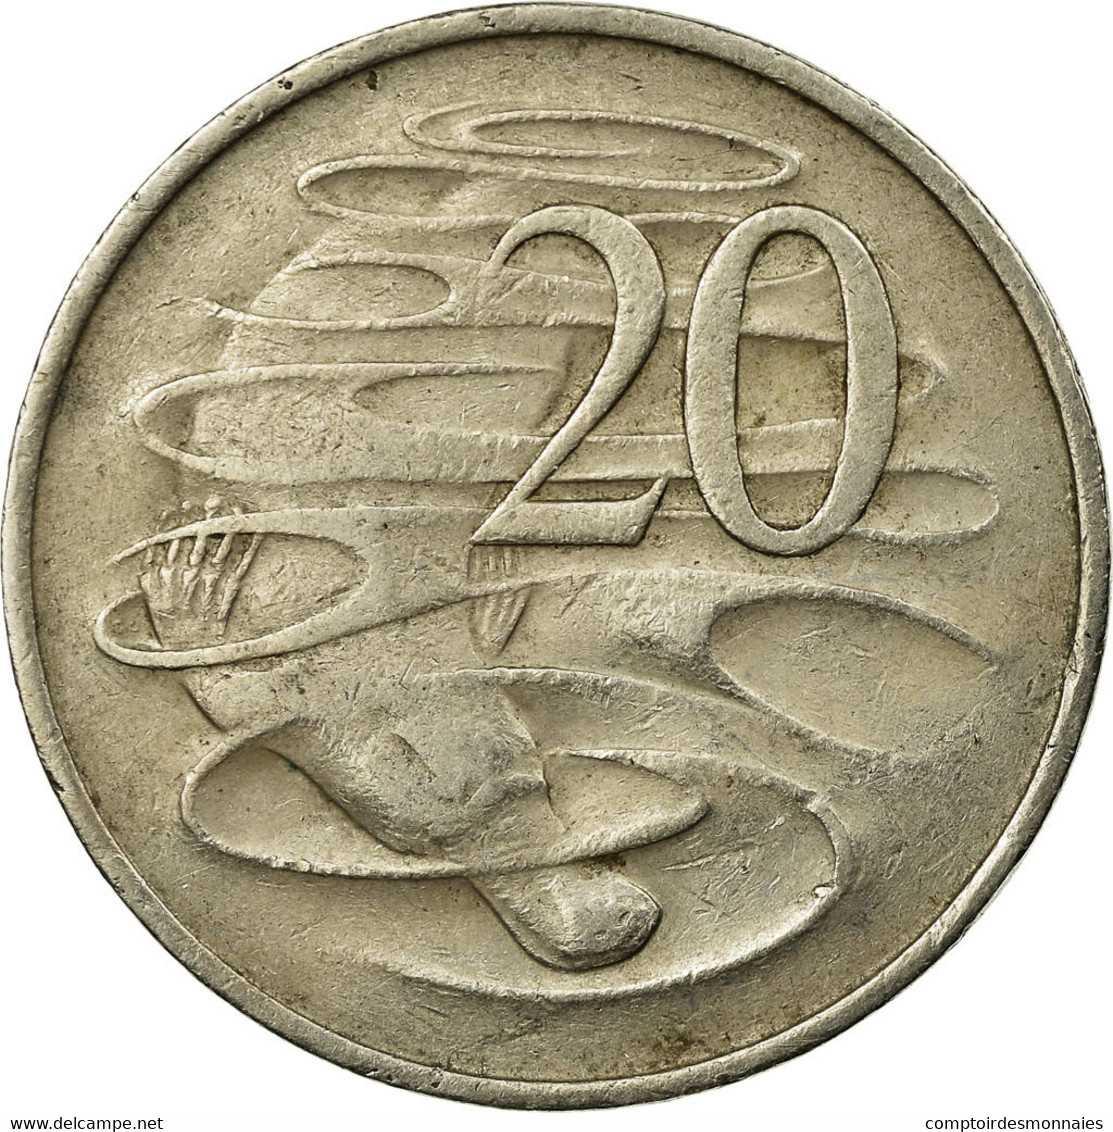 Monnaie, Australie, Elizabeth II, 20 Cents, 1970, TB+, Copper-nickel, KM:66 - 20 Cents